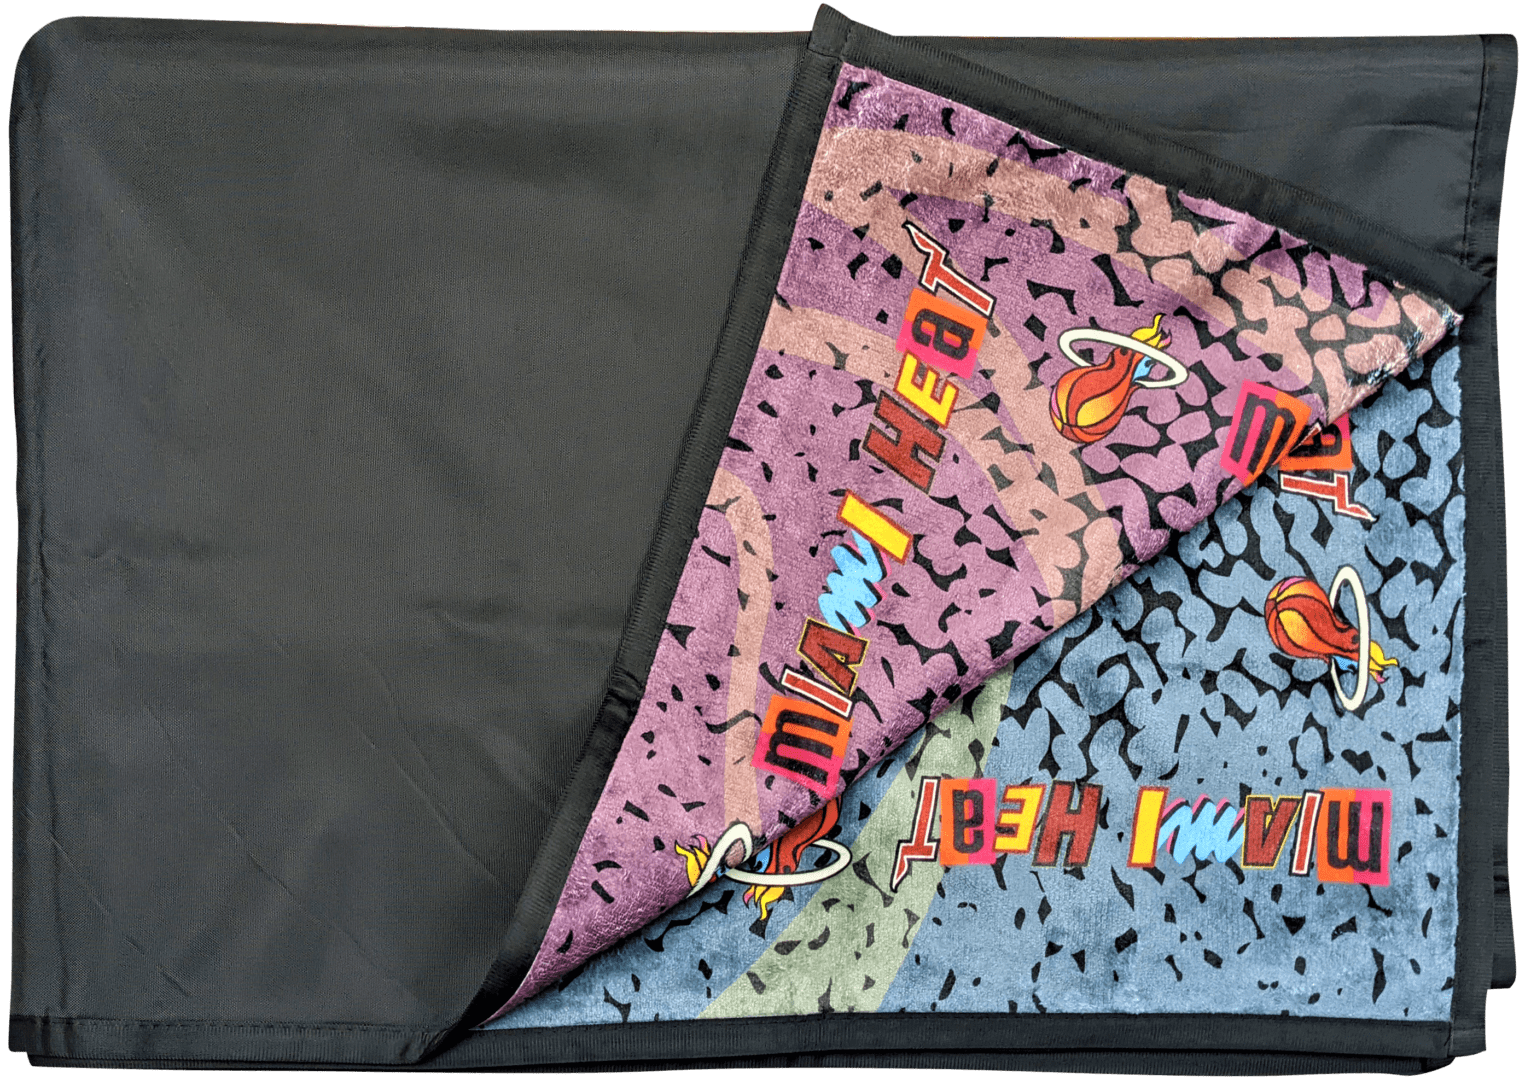 Foldable Picnic blanket with Miami Heat design print